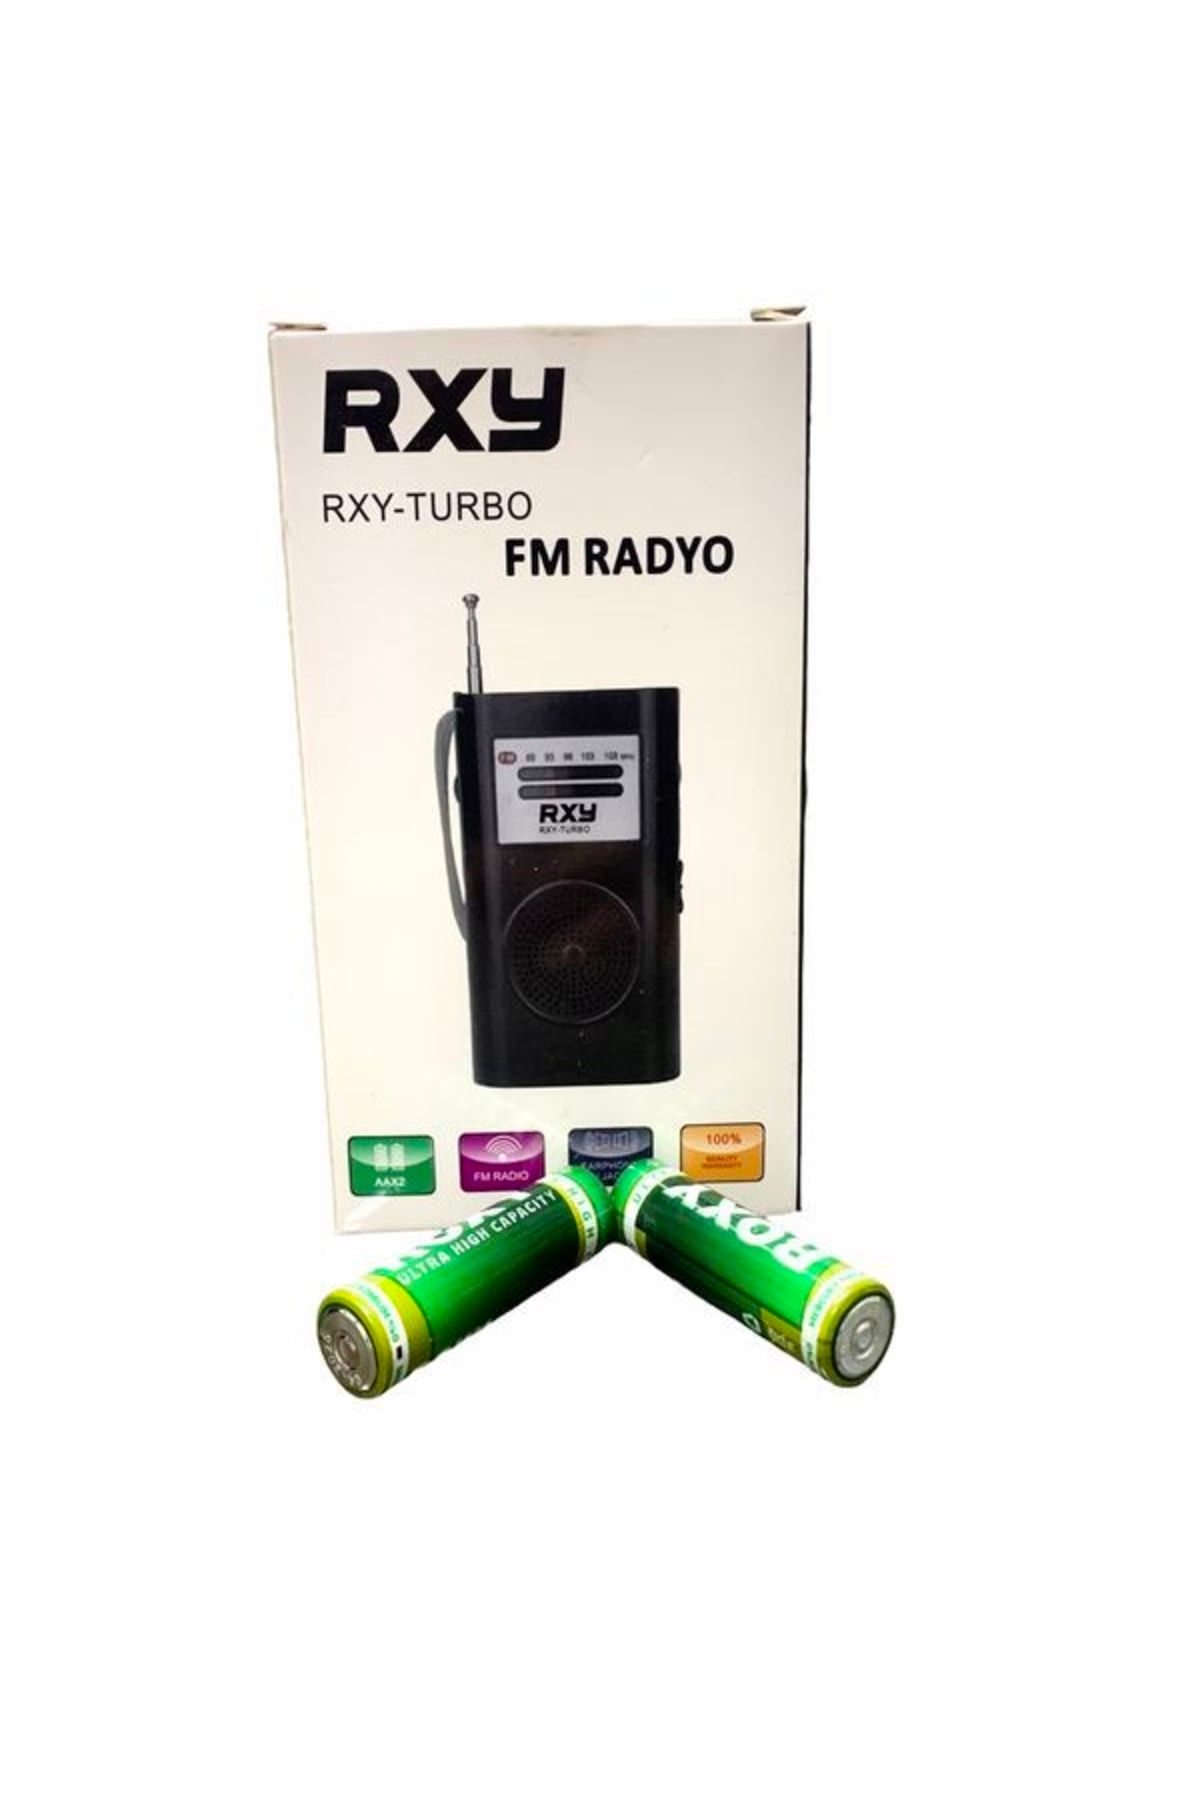 Roxy Rxy-turbo Cep Radyosu - Deprem Çantasına Uygun Taşınabilir Radyo + Kalem Pil